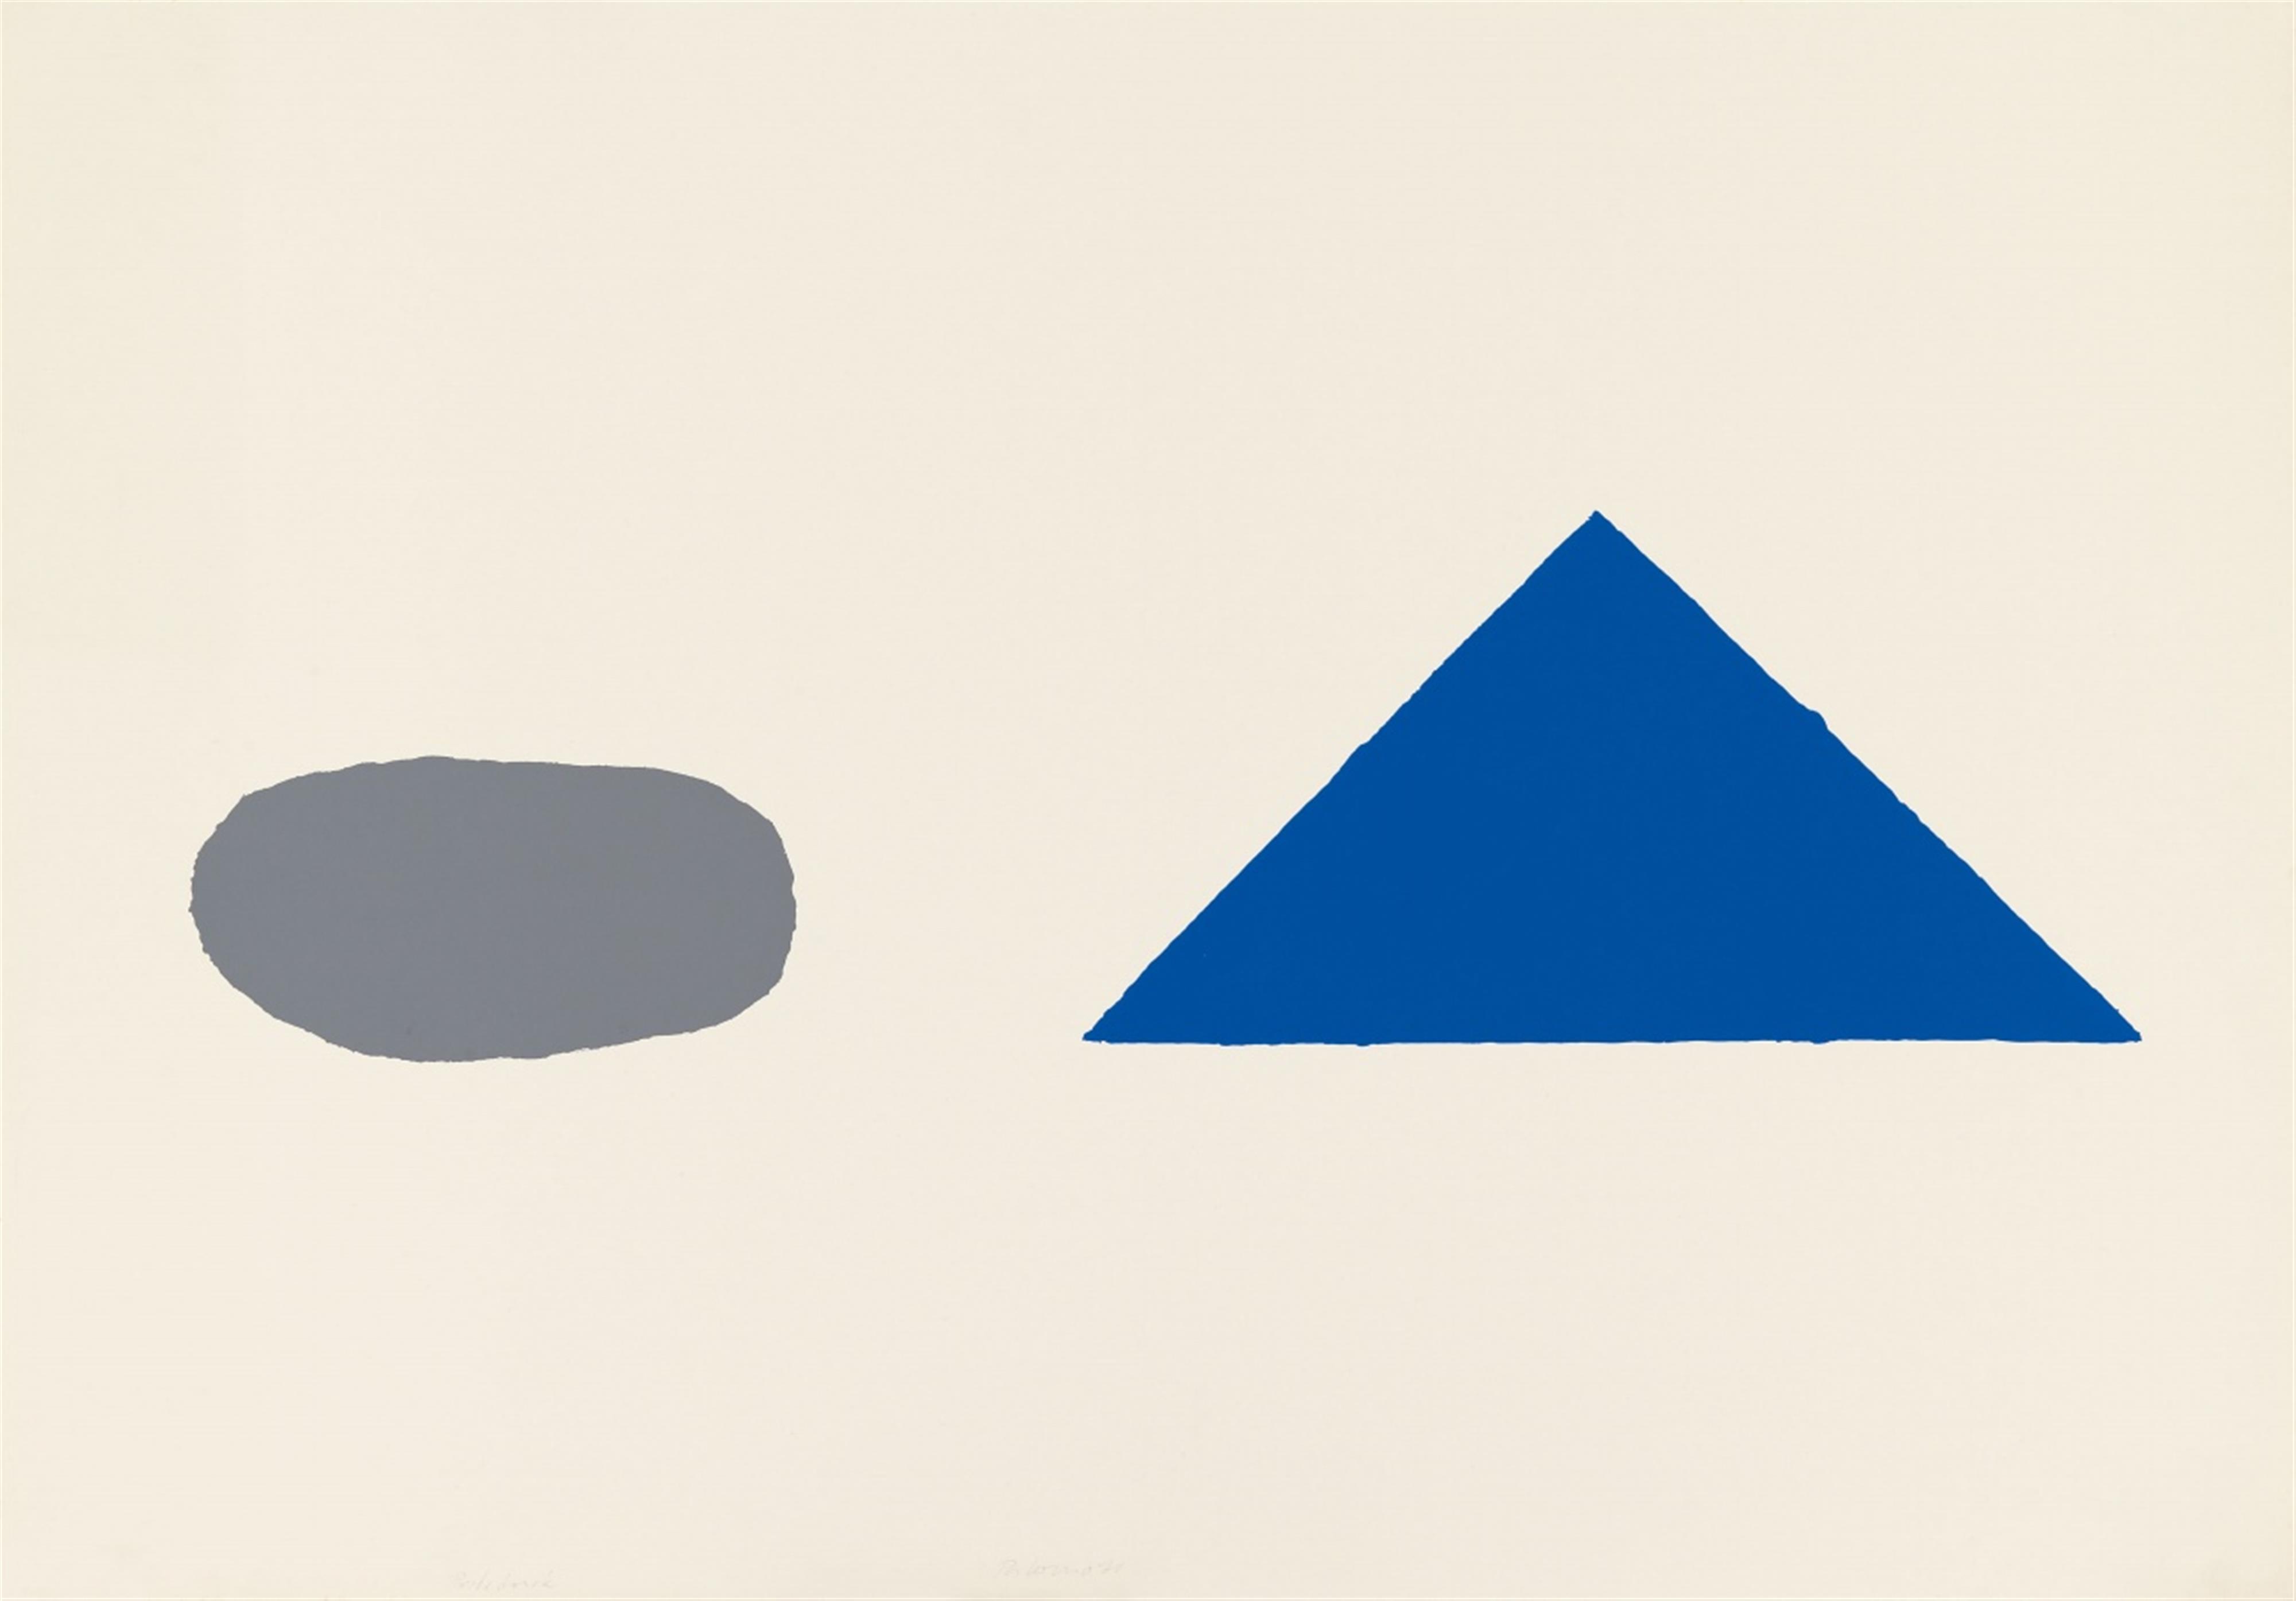 Blinky Palermo - Graue Scheibe, blaues Dreieck - image-1